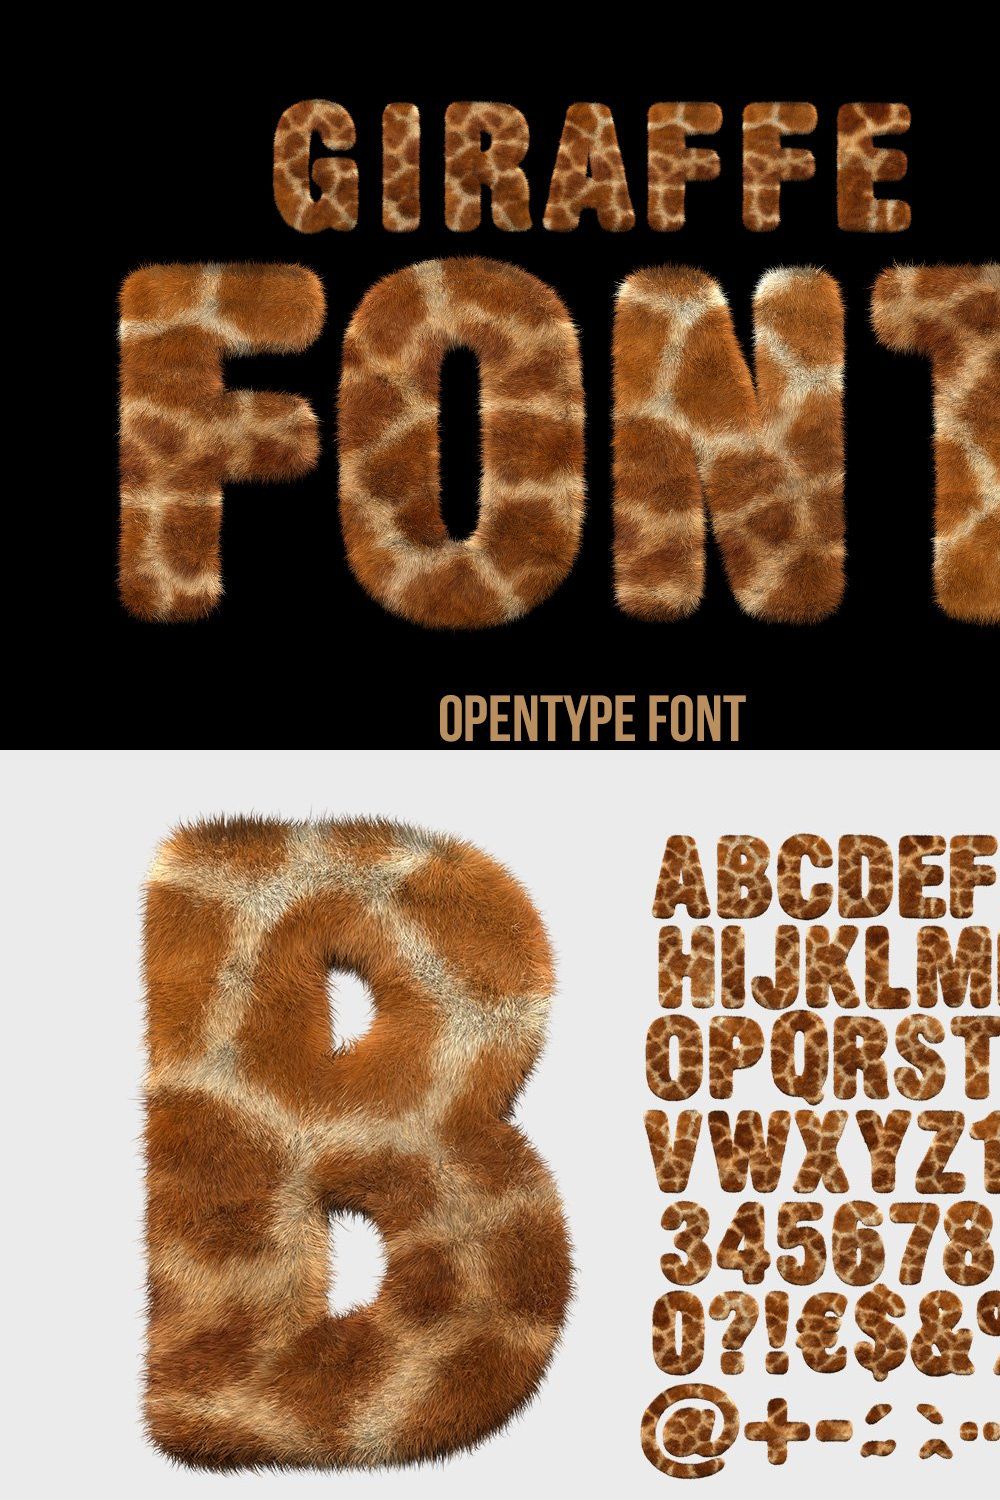 Giraffe Font pinterest preview image.